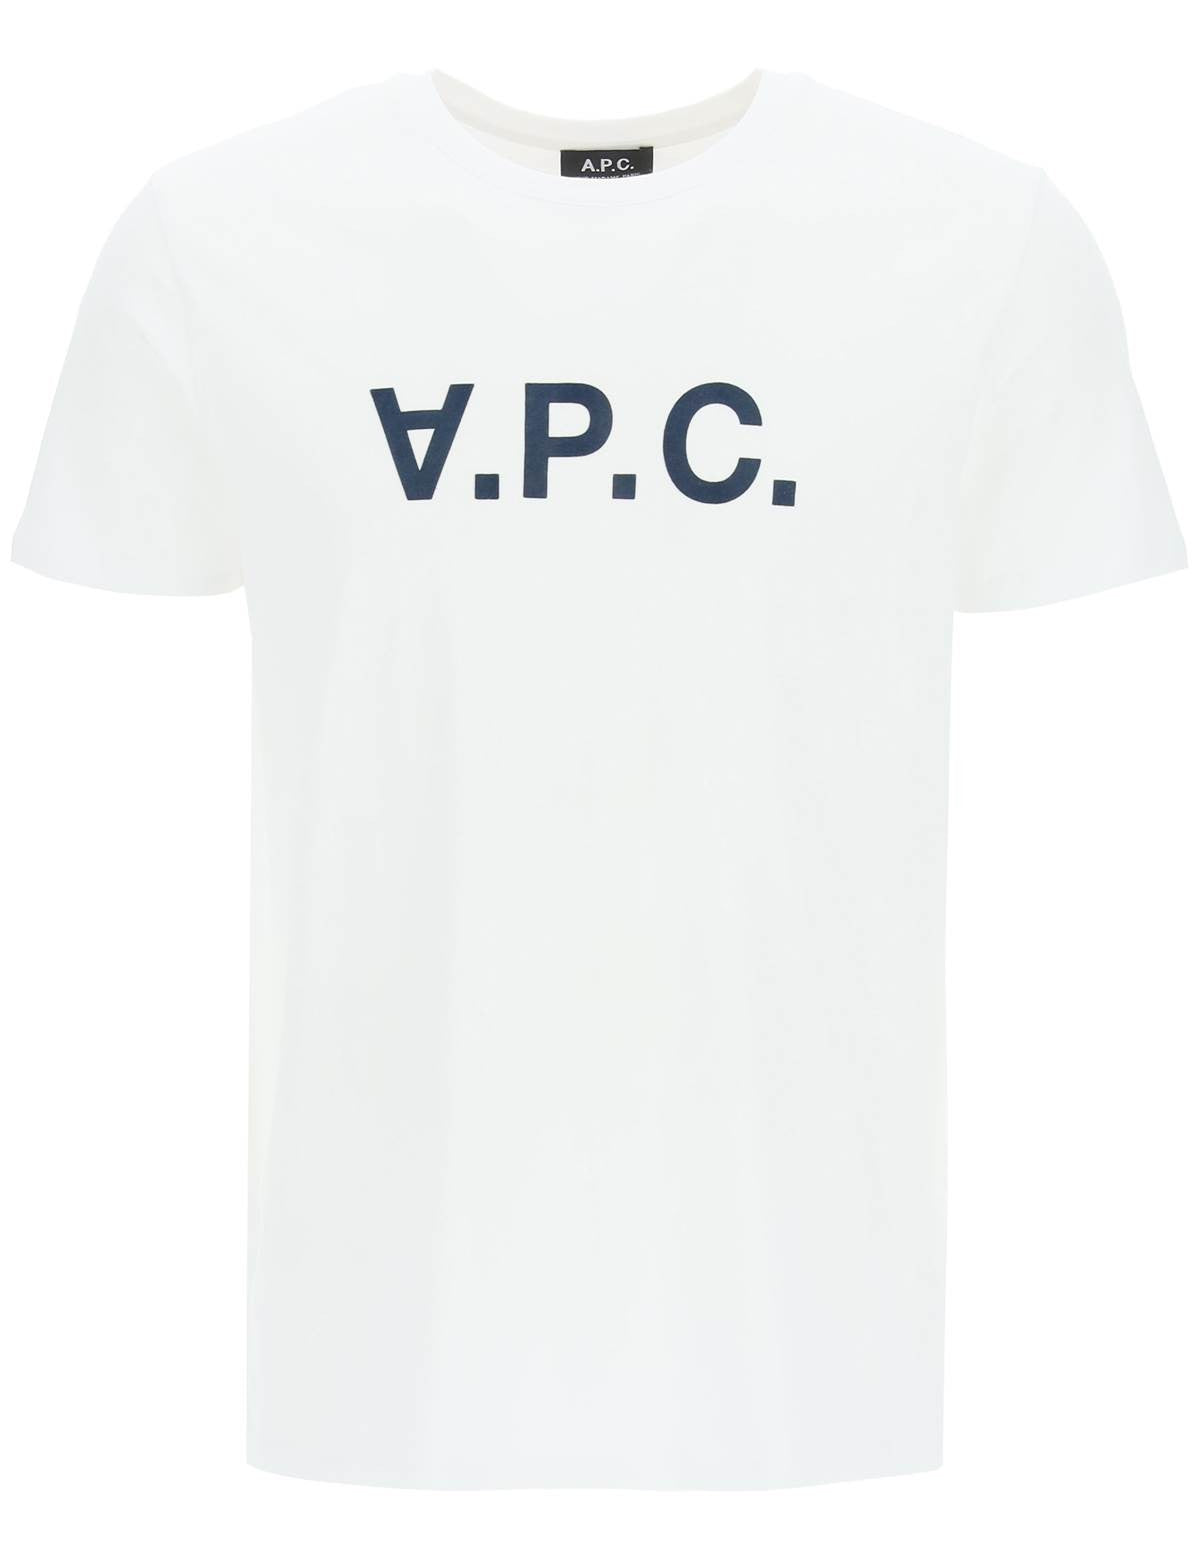 flocked-vpc-logo-t-shirt.jpg